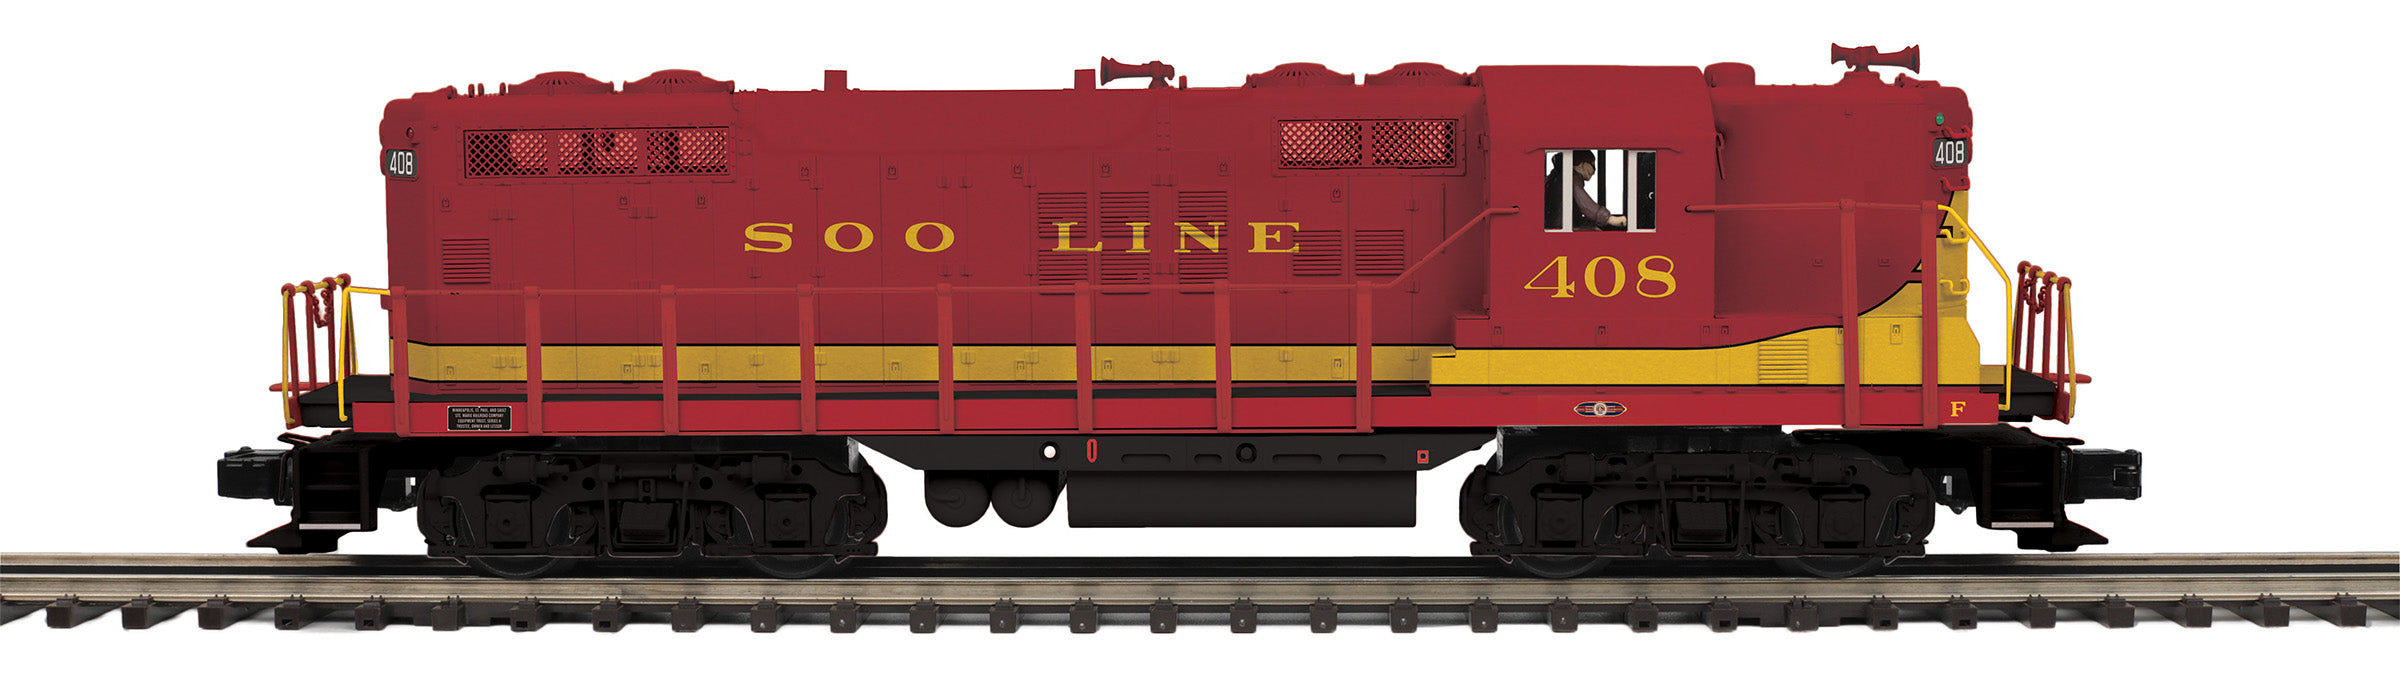 MTH 20-21628-1 - GP-9 Diesel Engine "SOO Line" #408 w/ PS3 - Custom Run for MrMuffin'sTrains